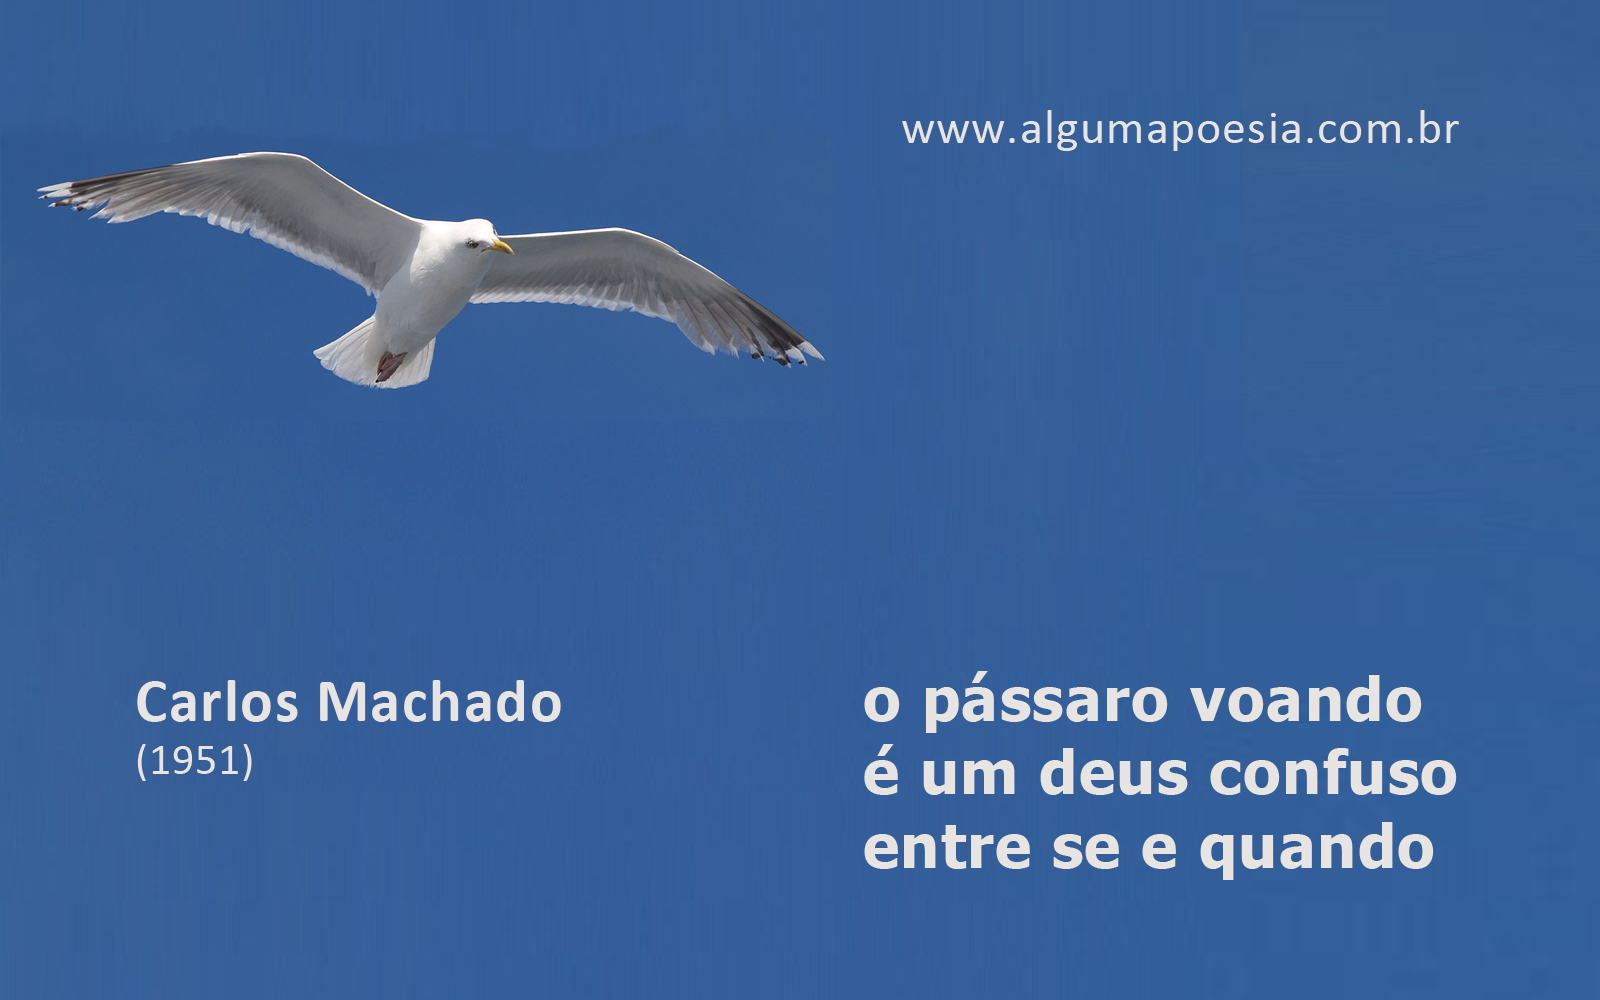 Carlos Machado - Provrbio 3